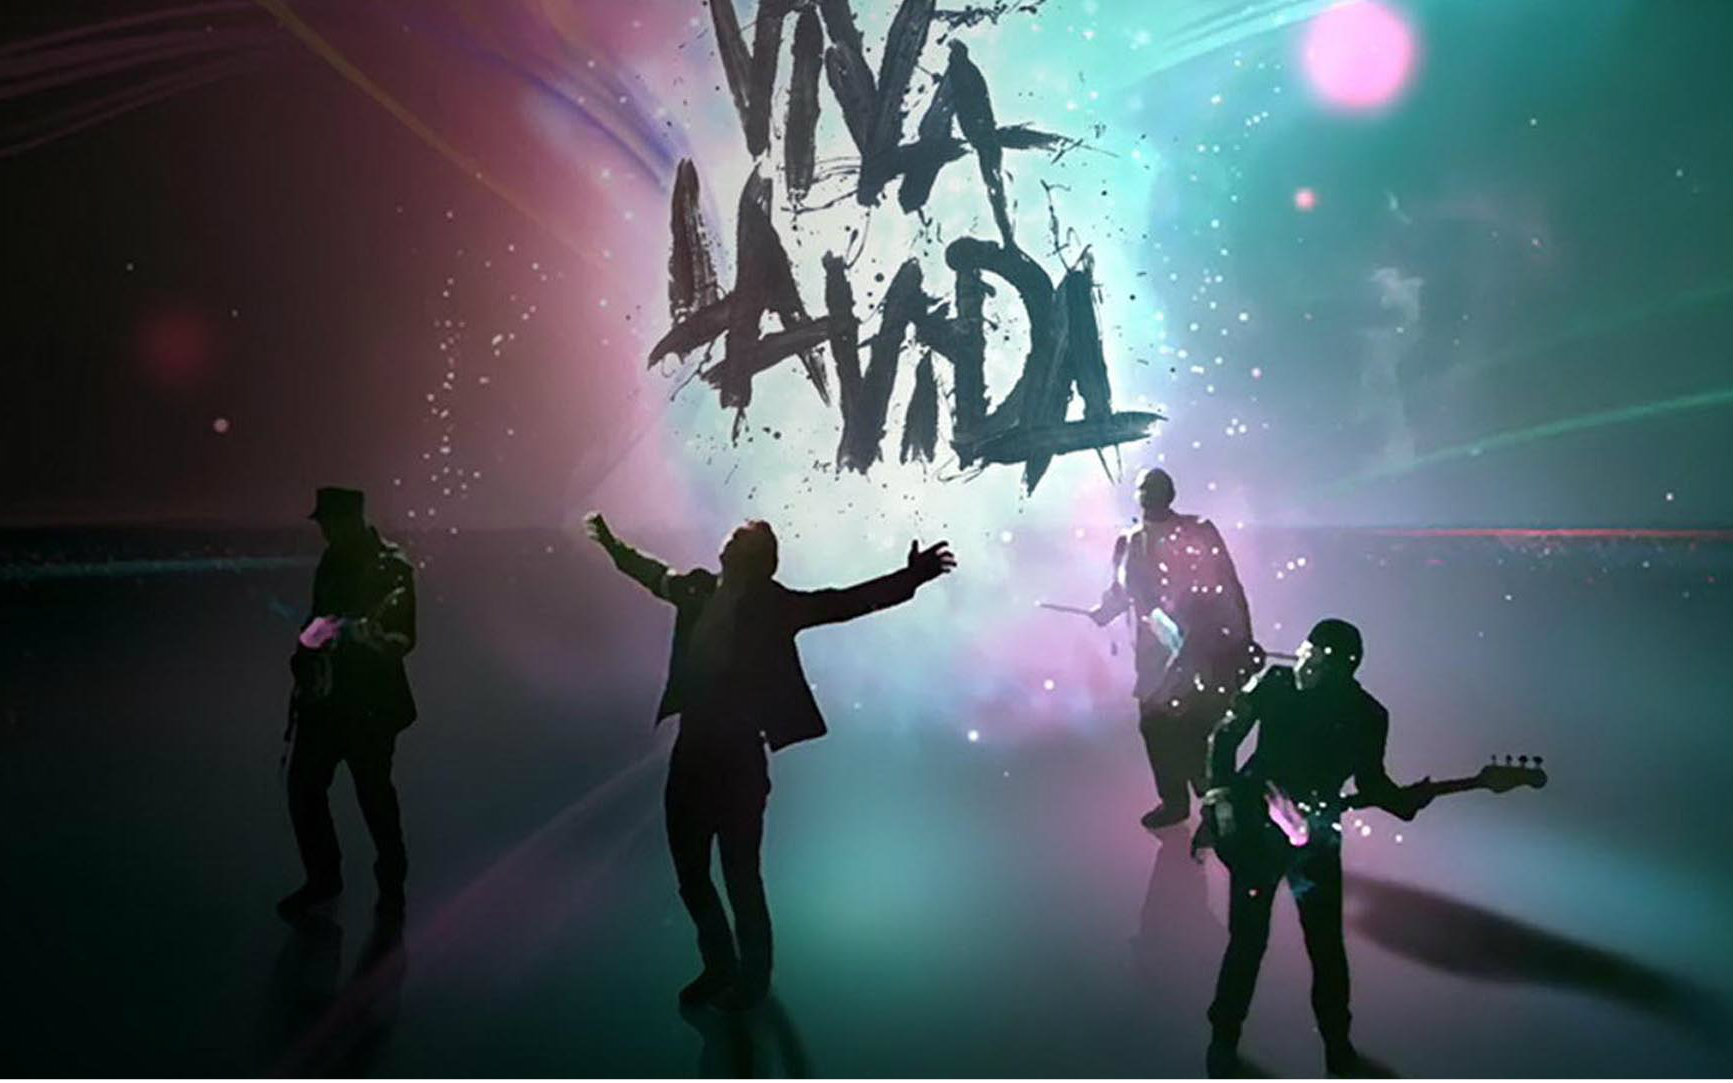 vivalavida专辑封面图片